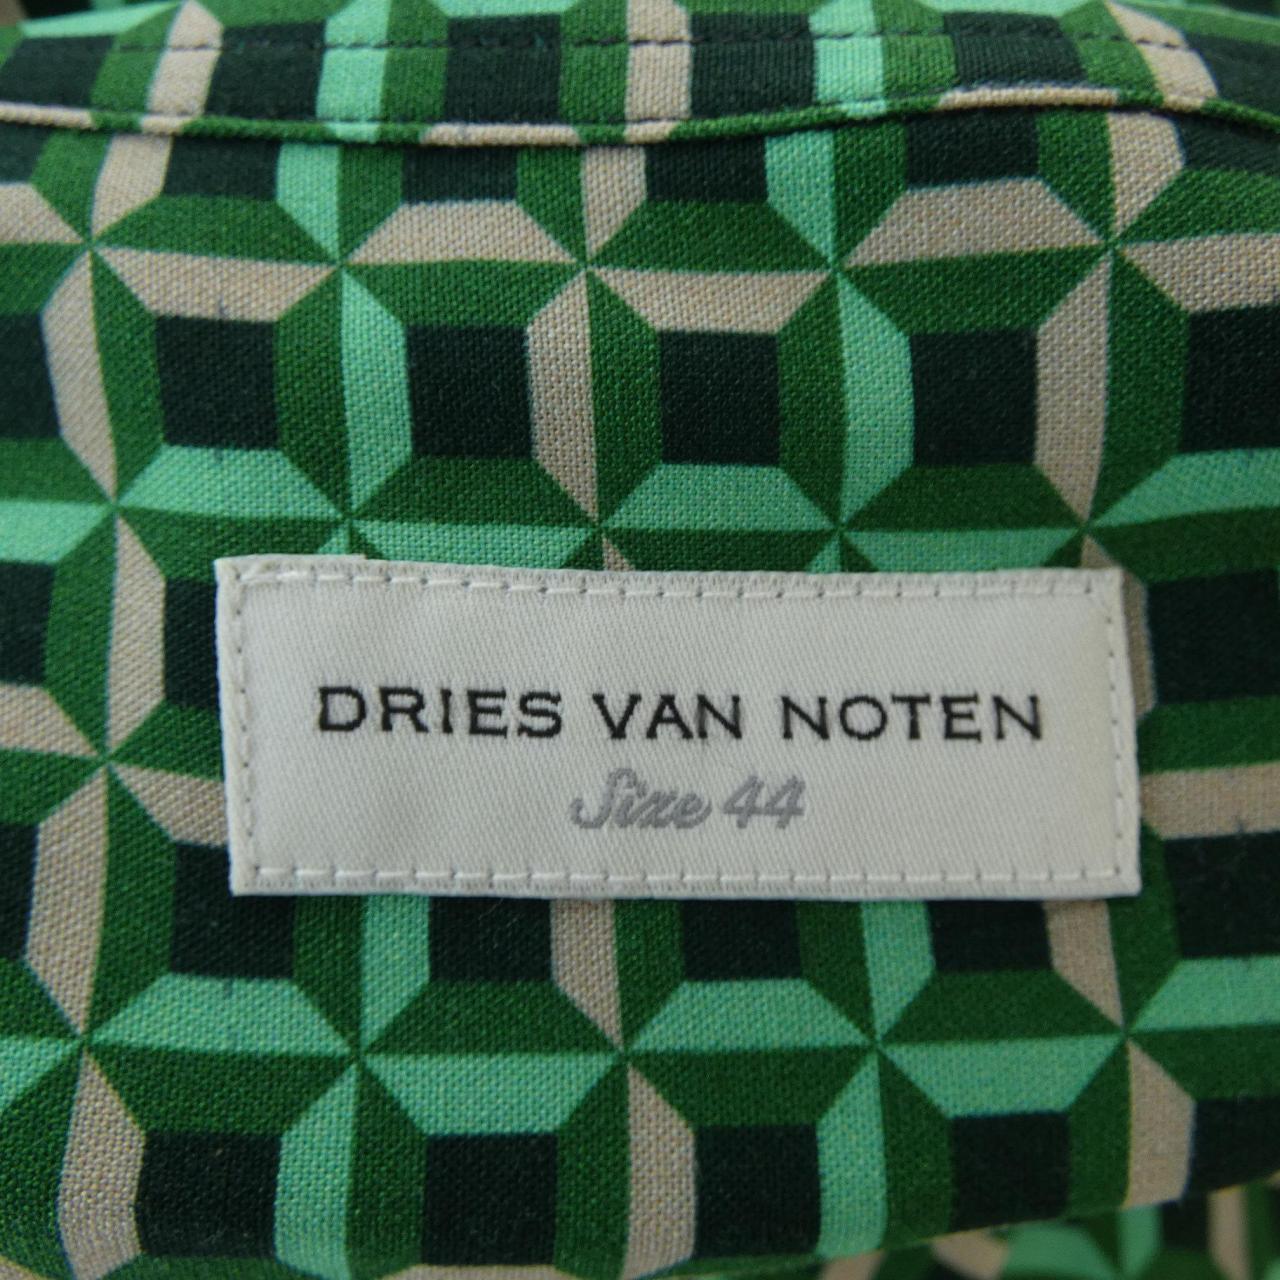 DRIES VAN NOTEN德賴斯·範諾頓 (Dries Van Noten) 短袖襯衫